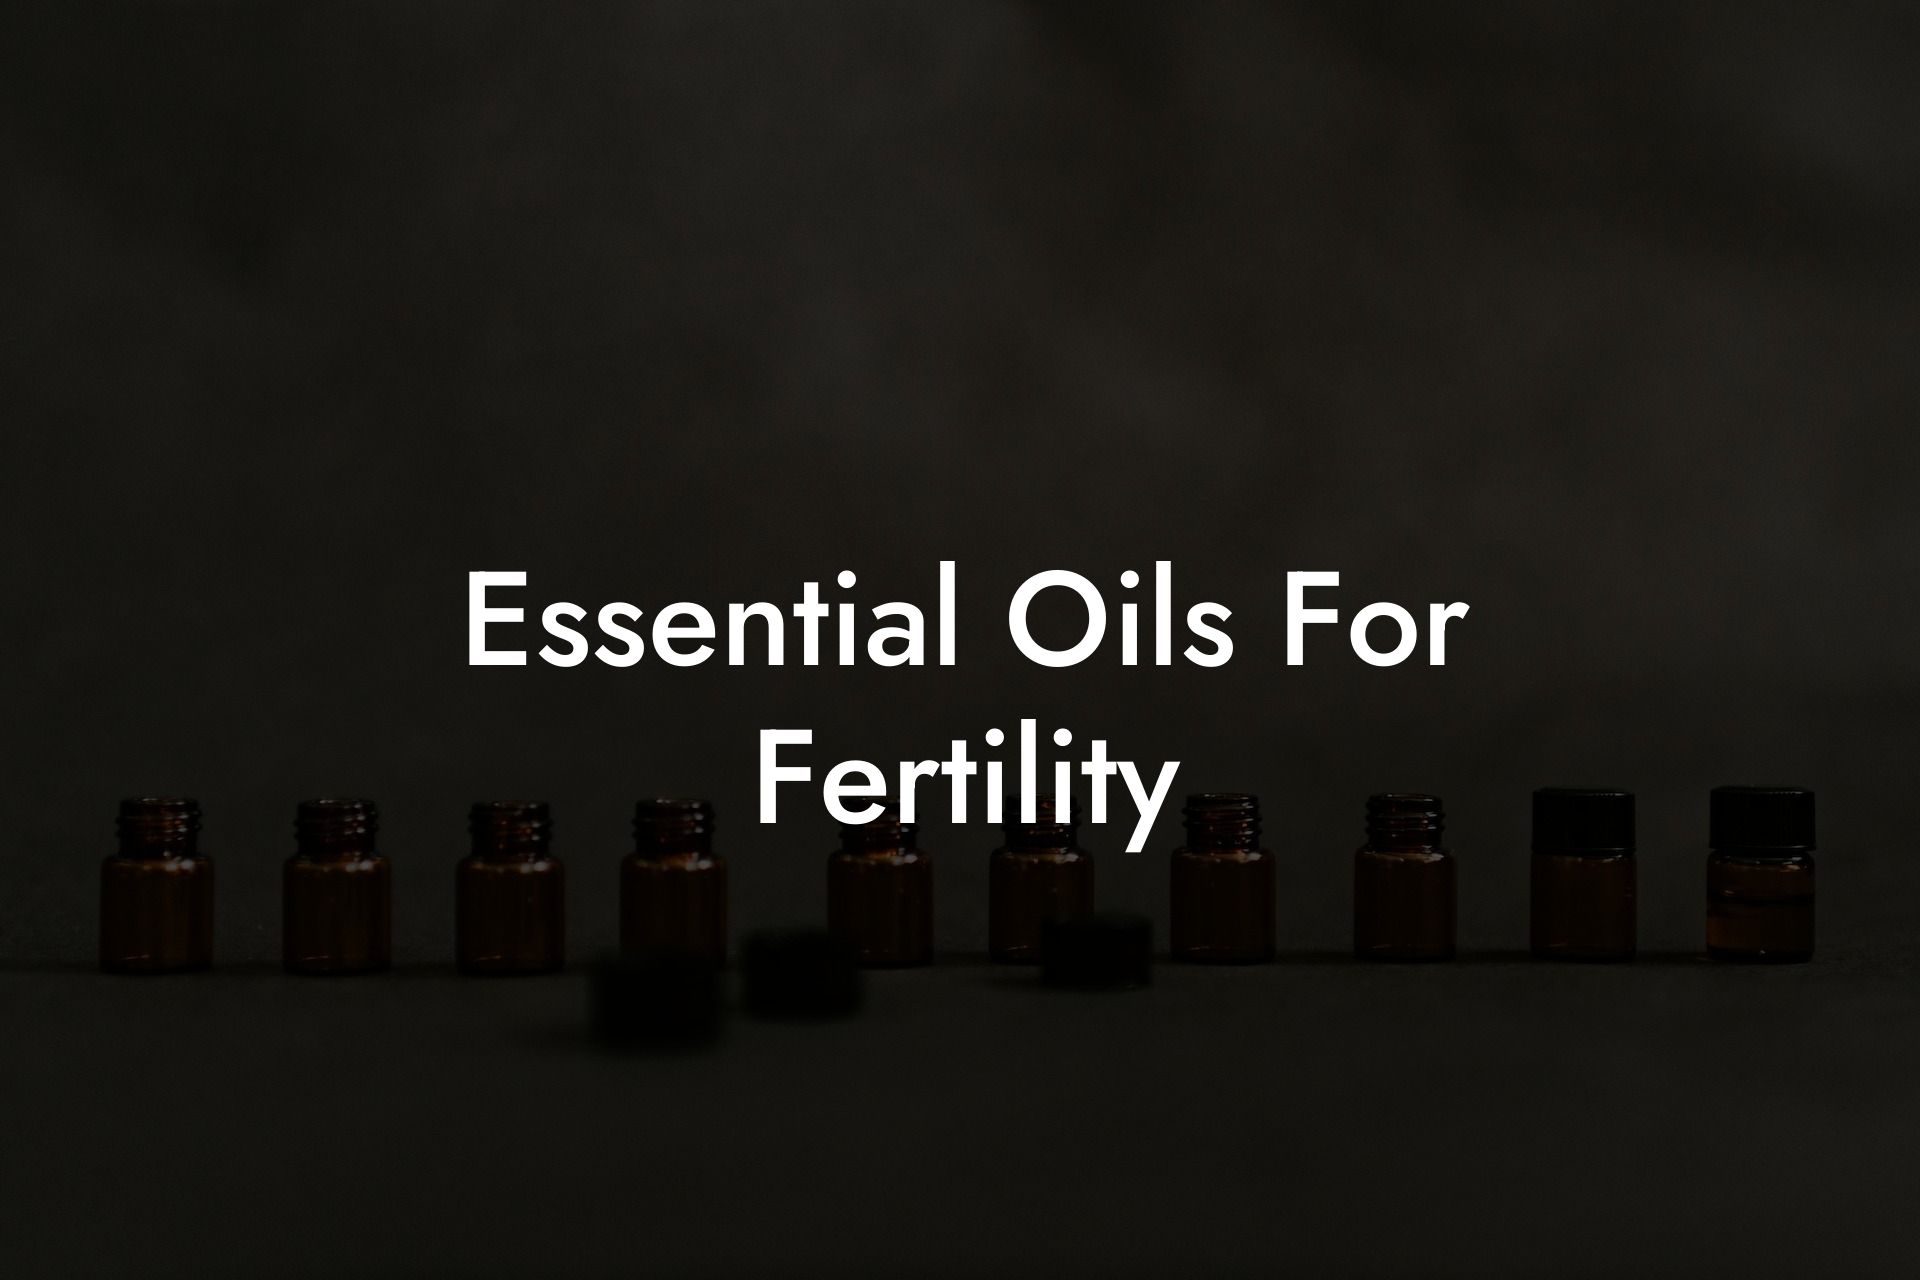 Essential Oils For Fertility